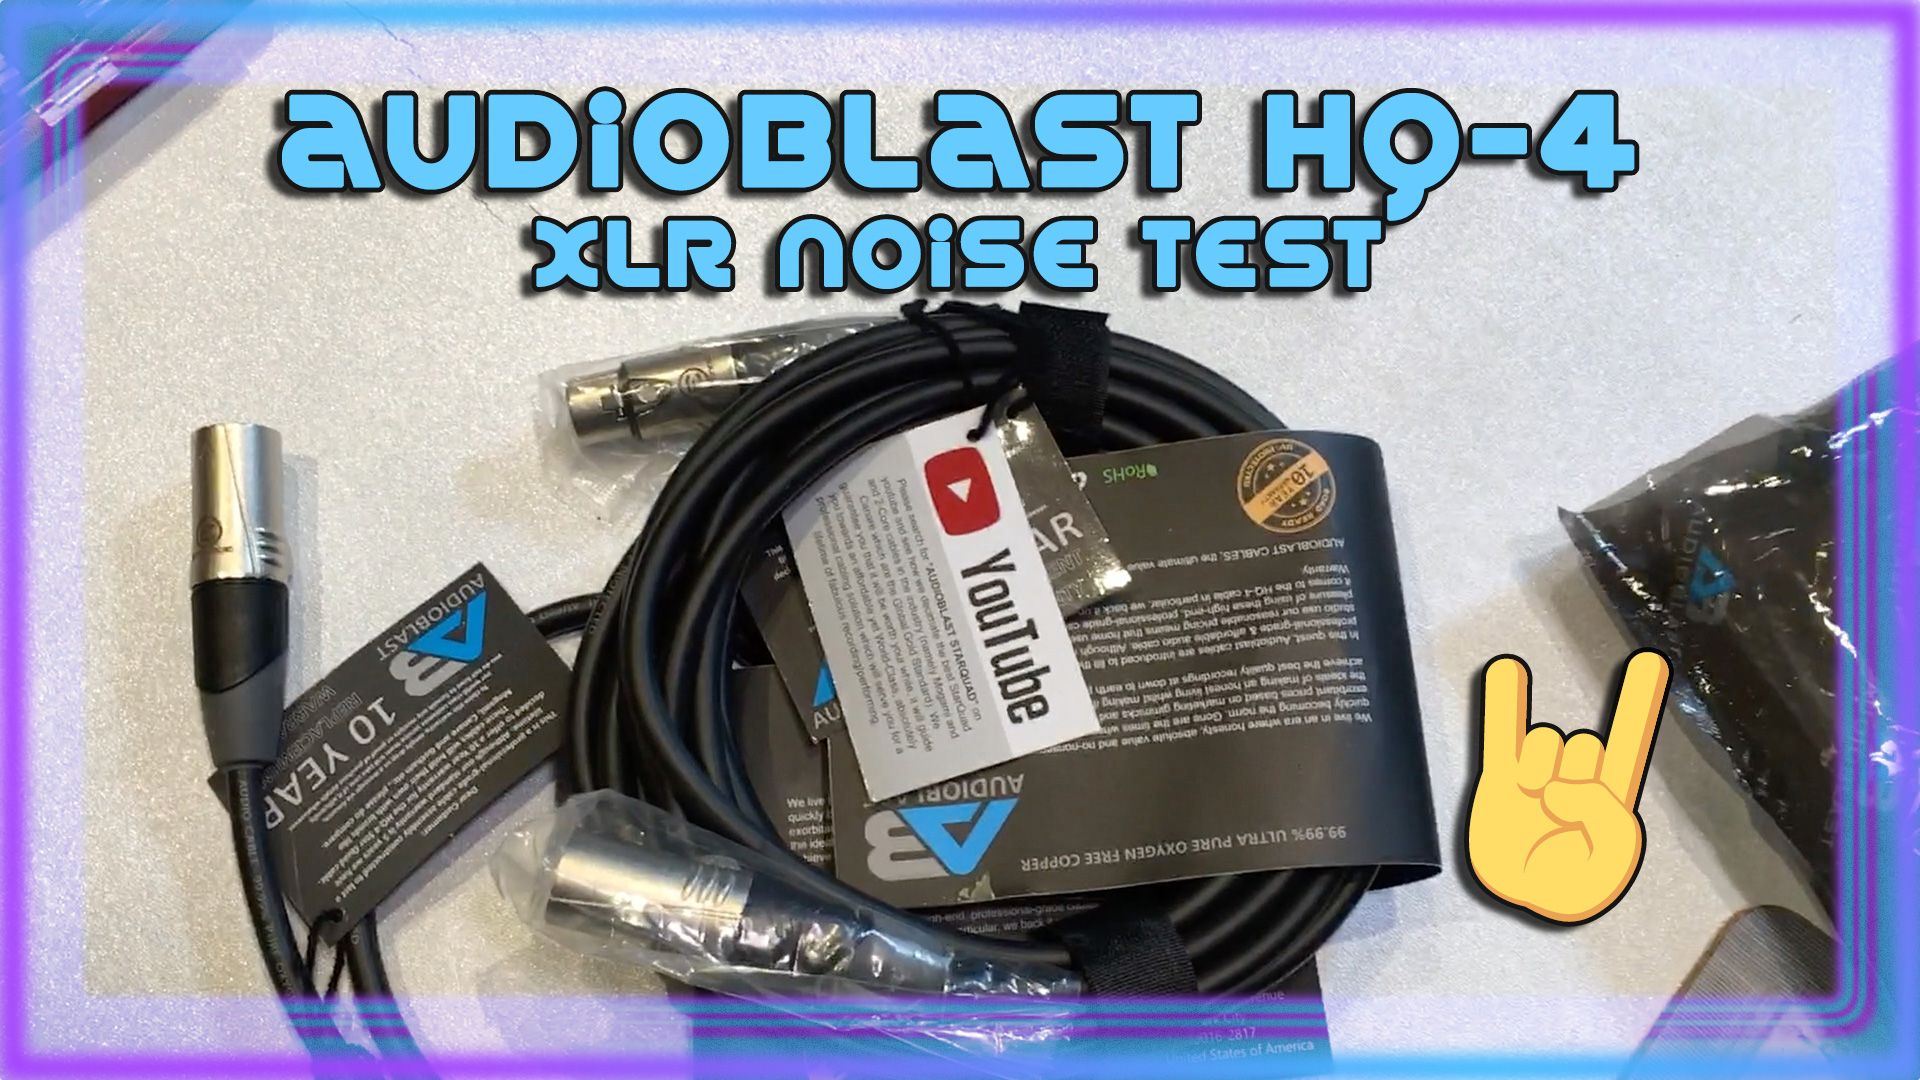 Audioblast HQ-4 XLR Noise Test